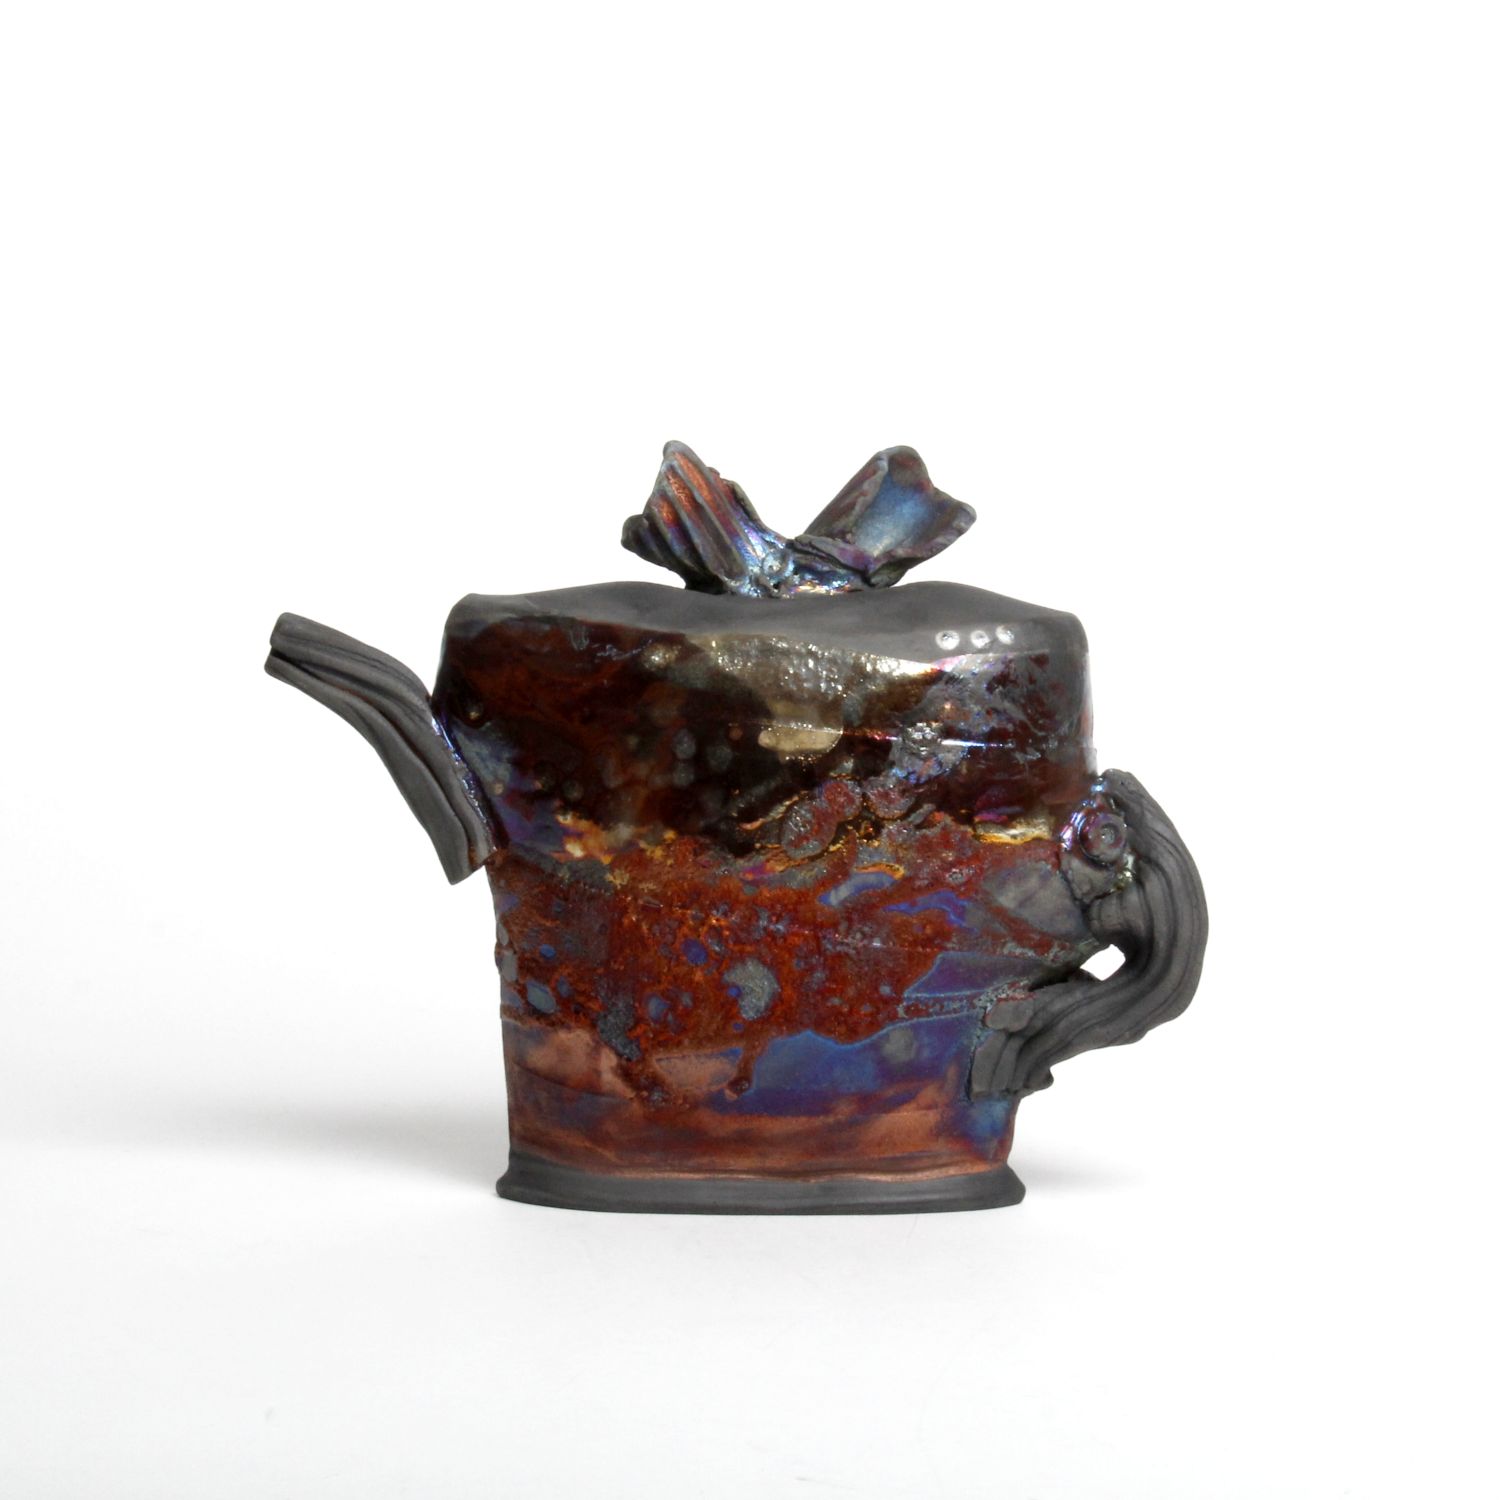 Shu-Chen Cheng: Abstract Lustre Raku Teapot Product Image 1 of 3